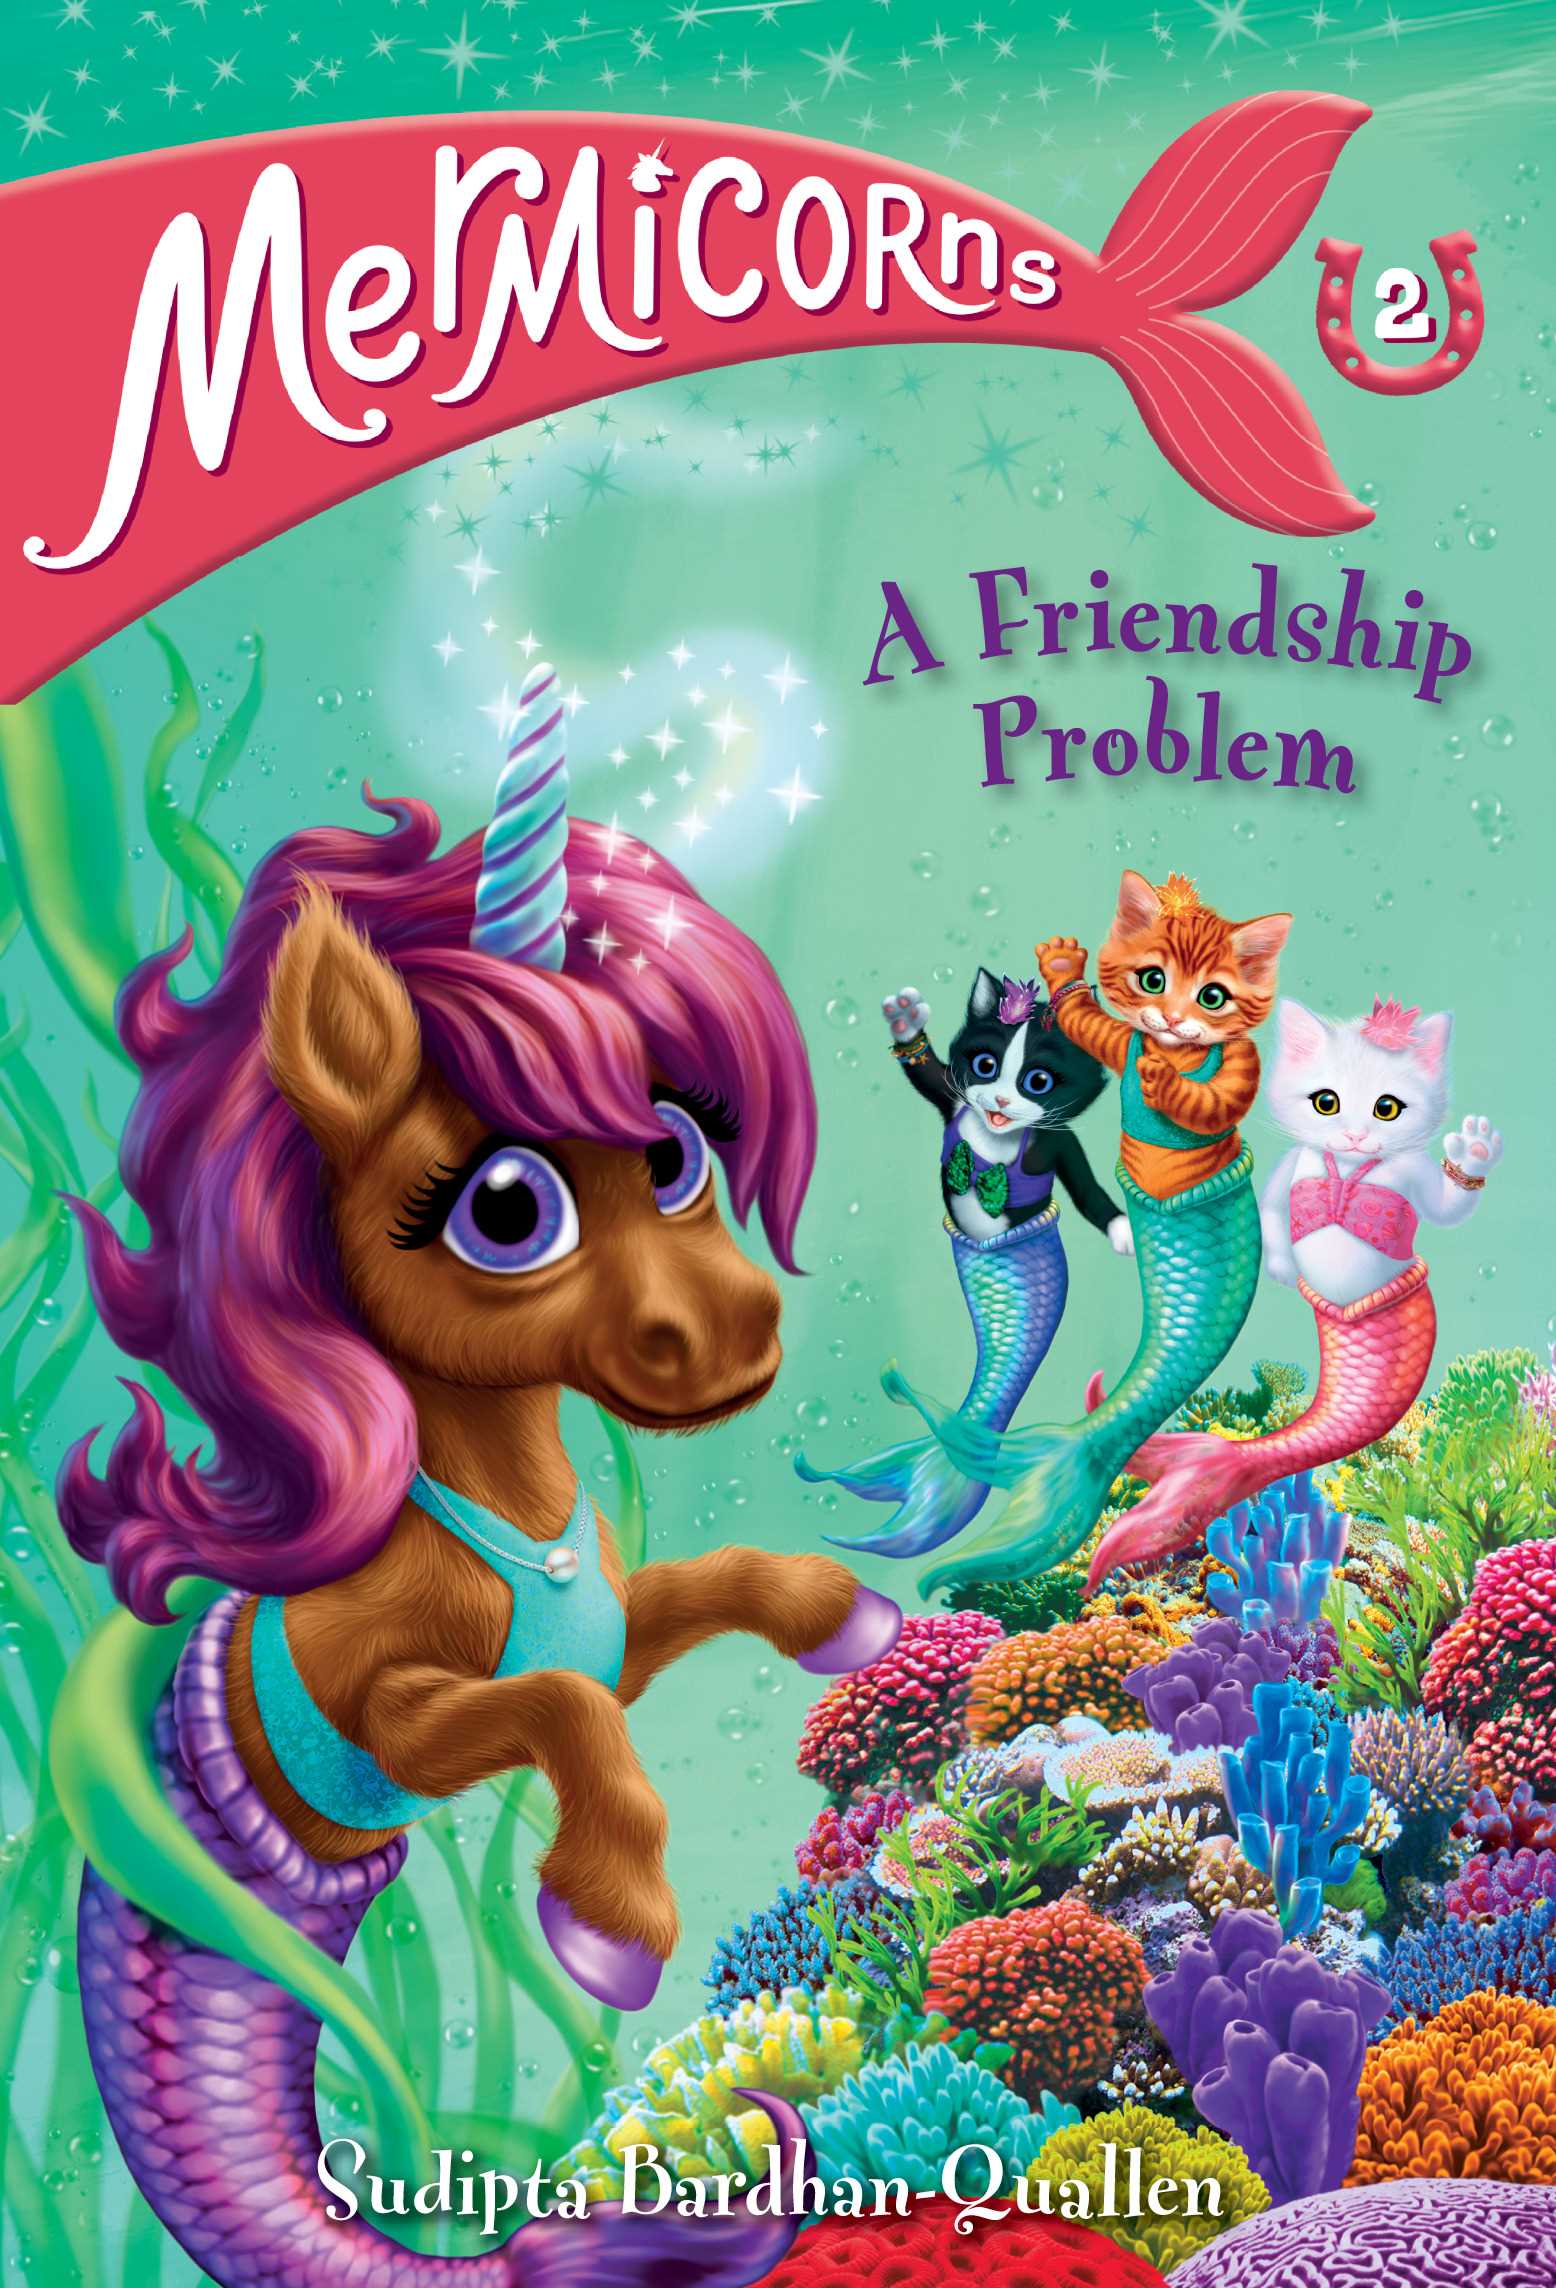 Mermicorns #02: A Friendship Problem